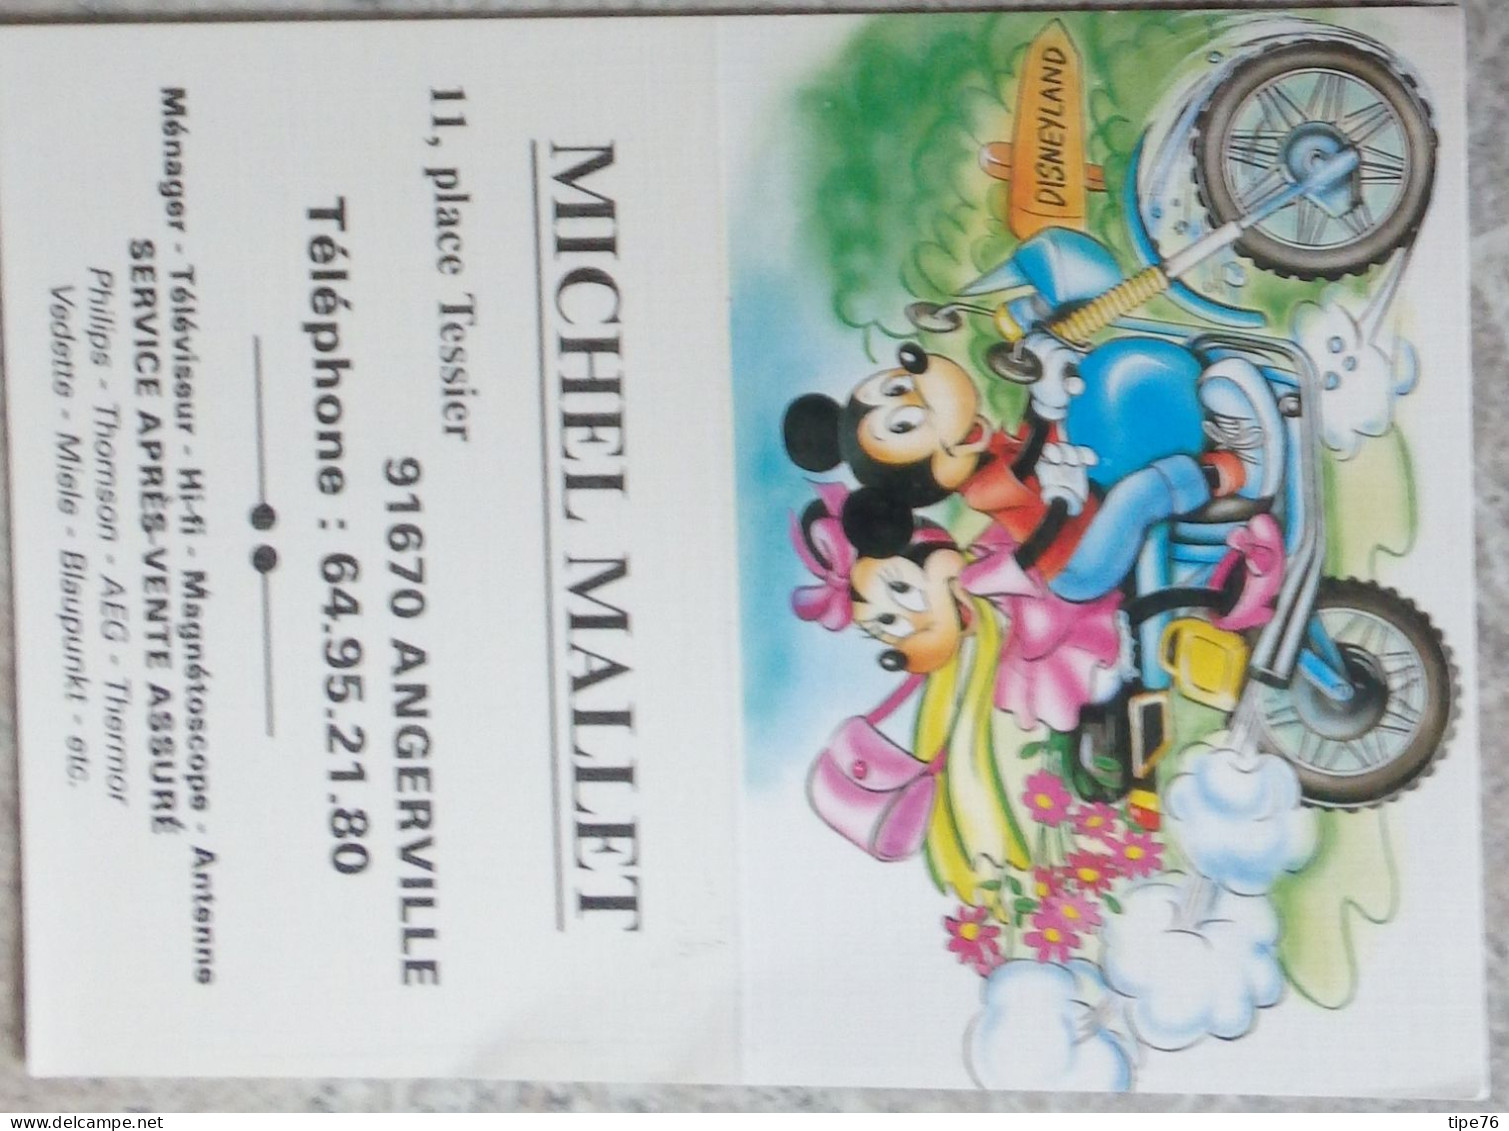 Petit Calendrier Poche 1990 Disney Mickey Minnie Motocyclette  - Angerville Essonne - Petit Format : 1981-90